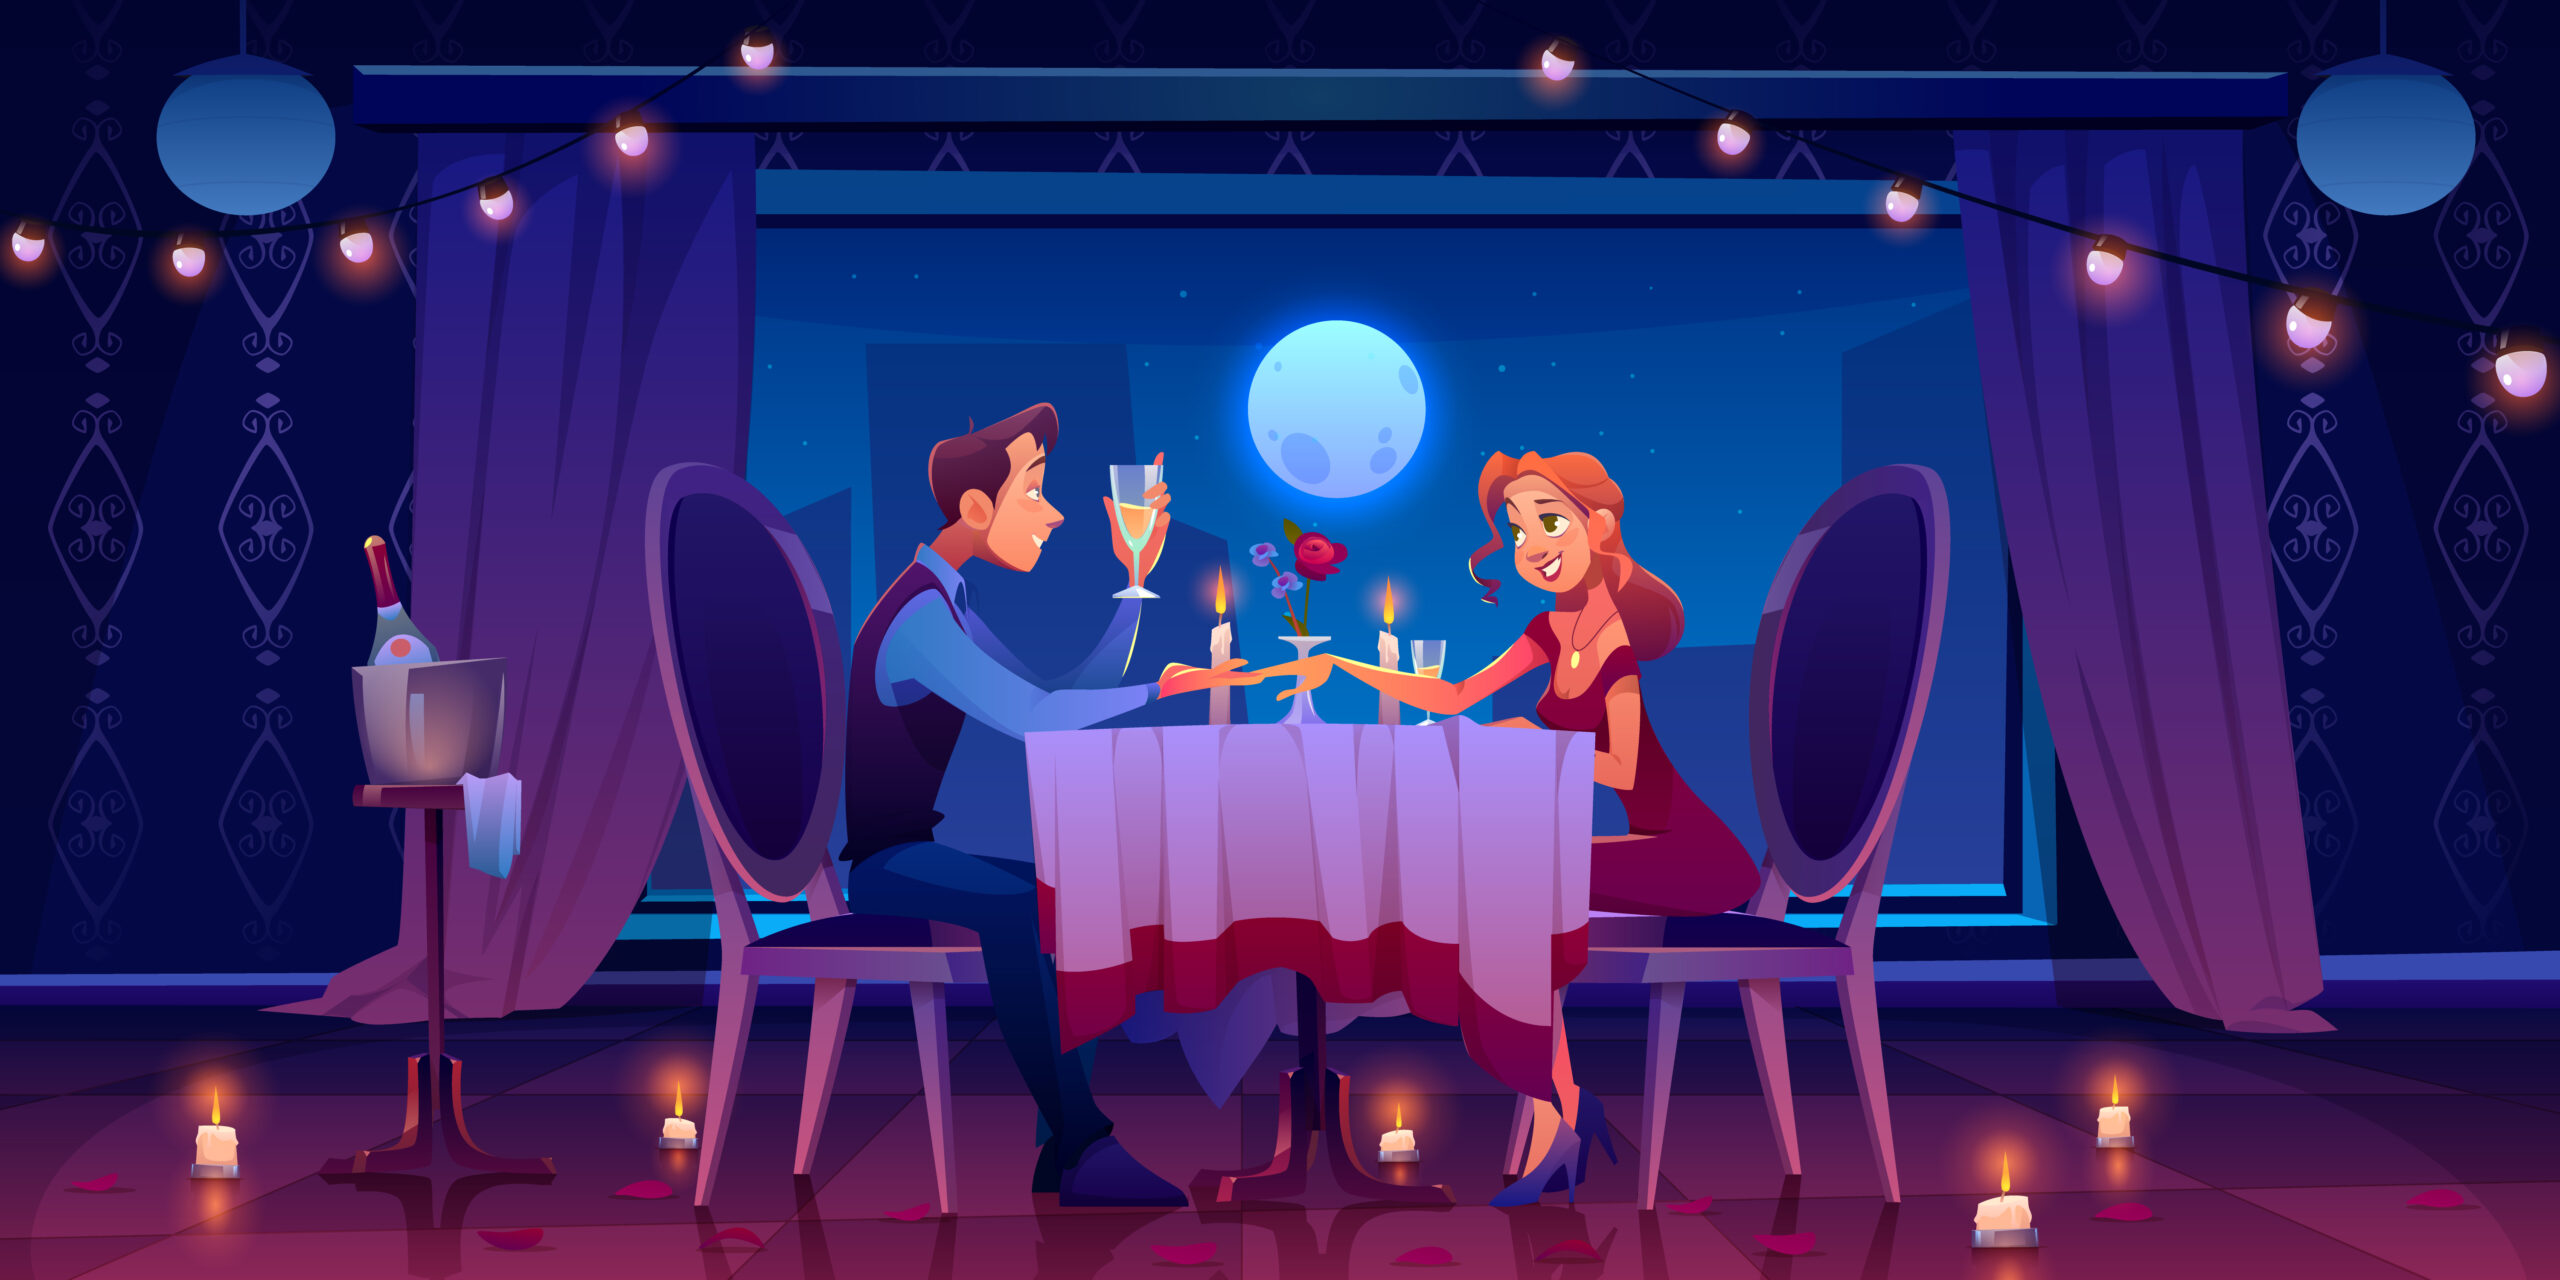 Romantic diner scaled